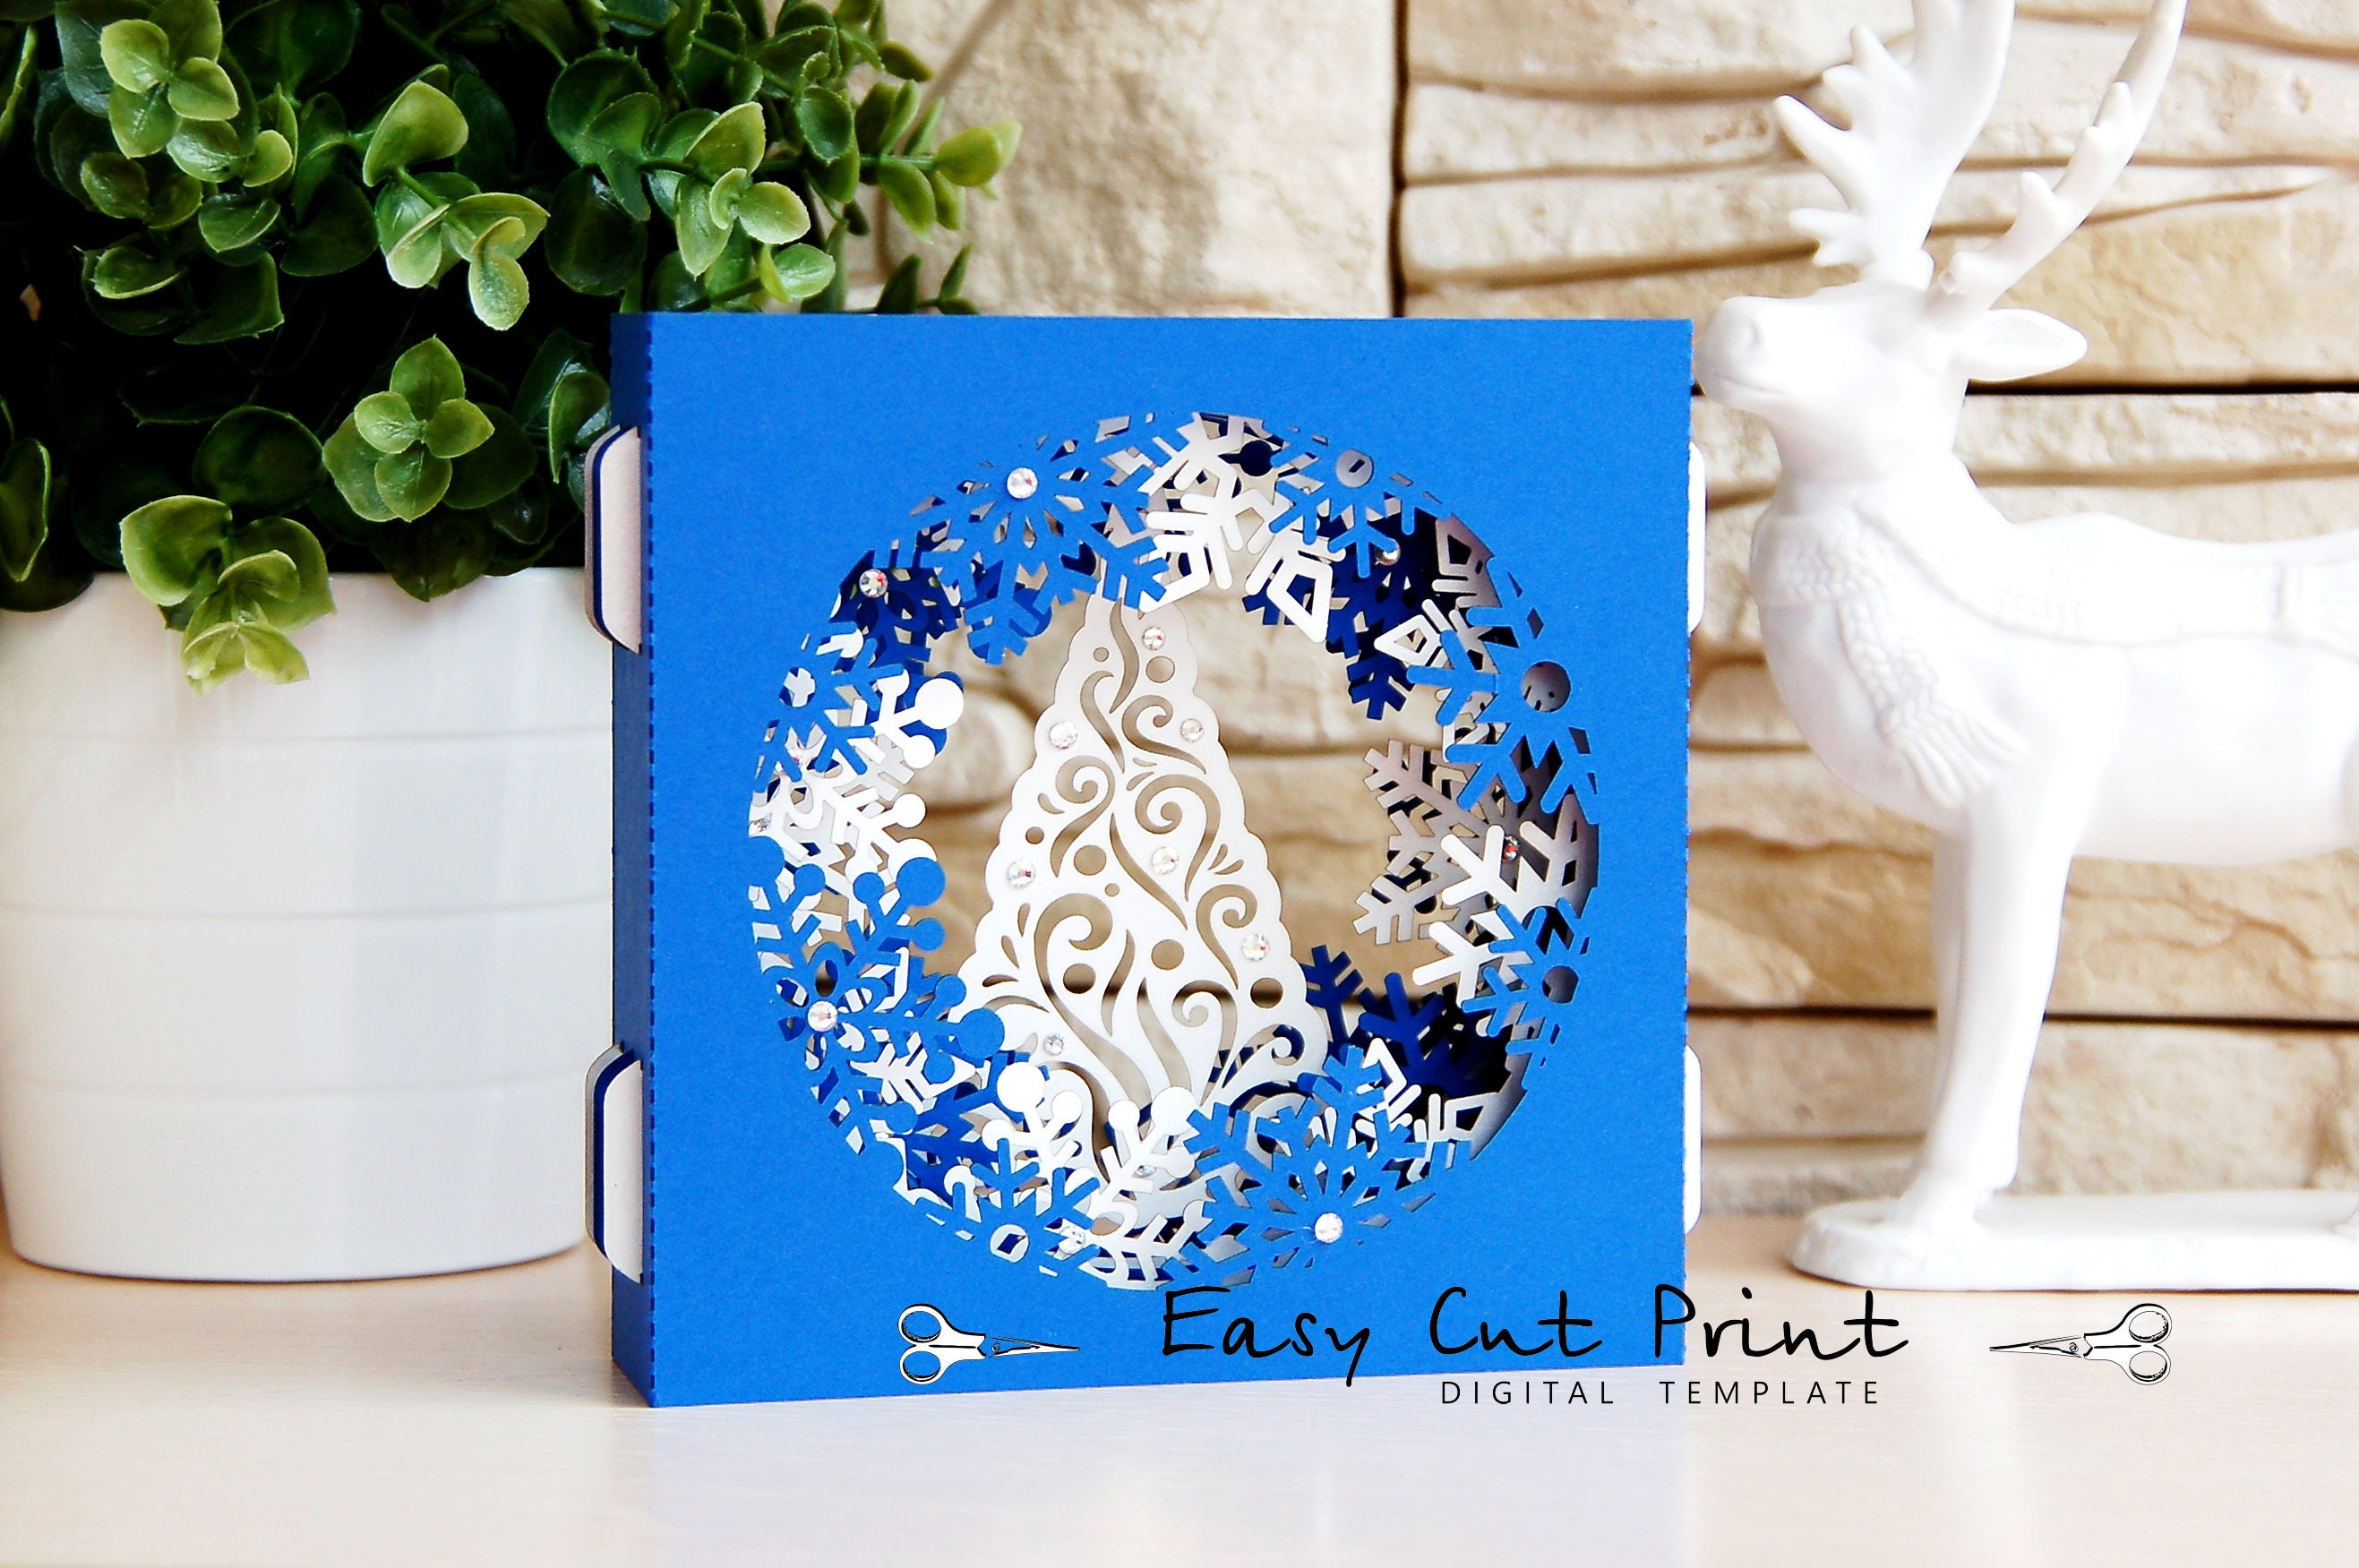 Snowflake Christmas Shadow box gift 3D Card Laser cut template